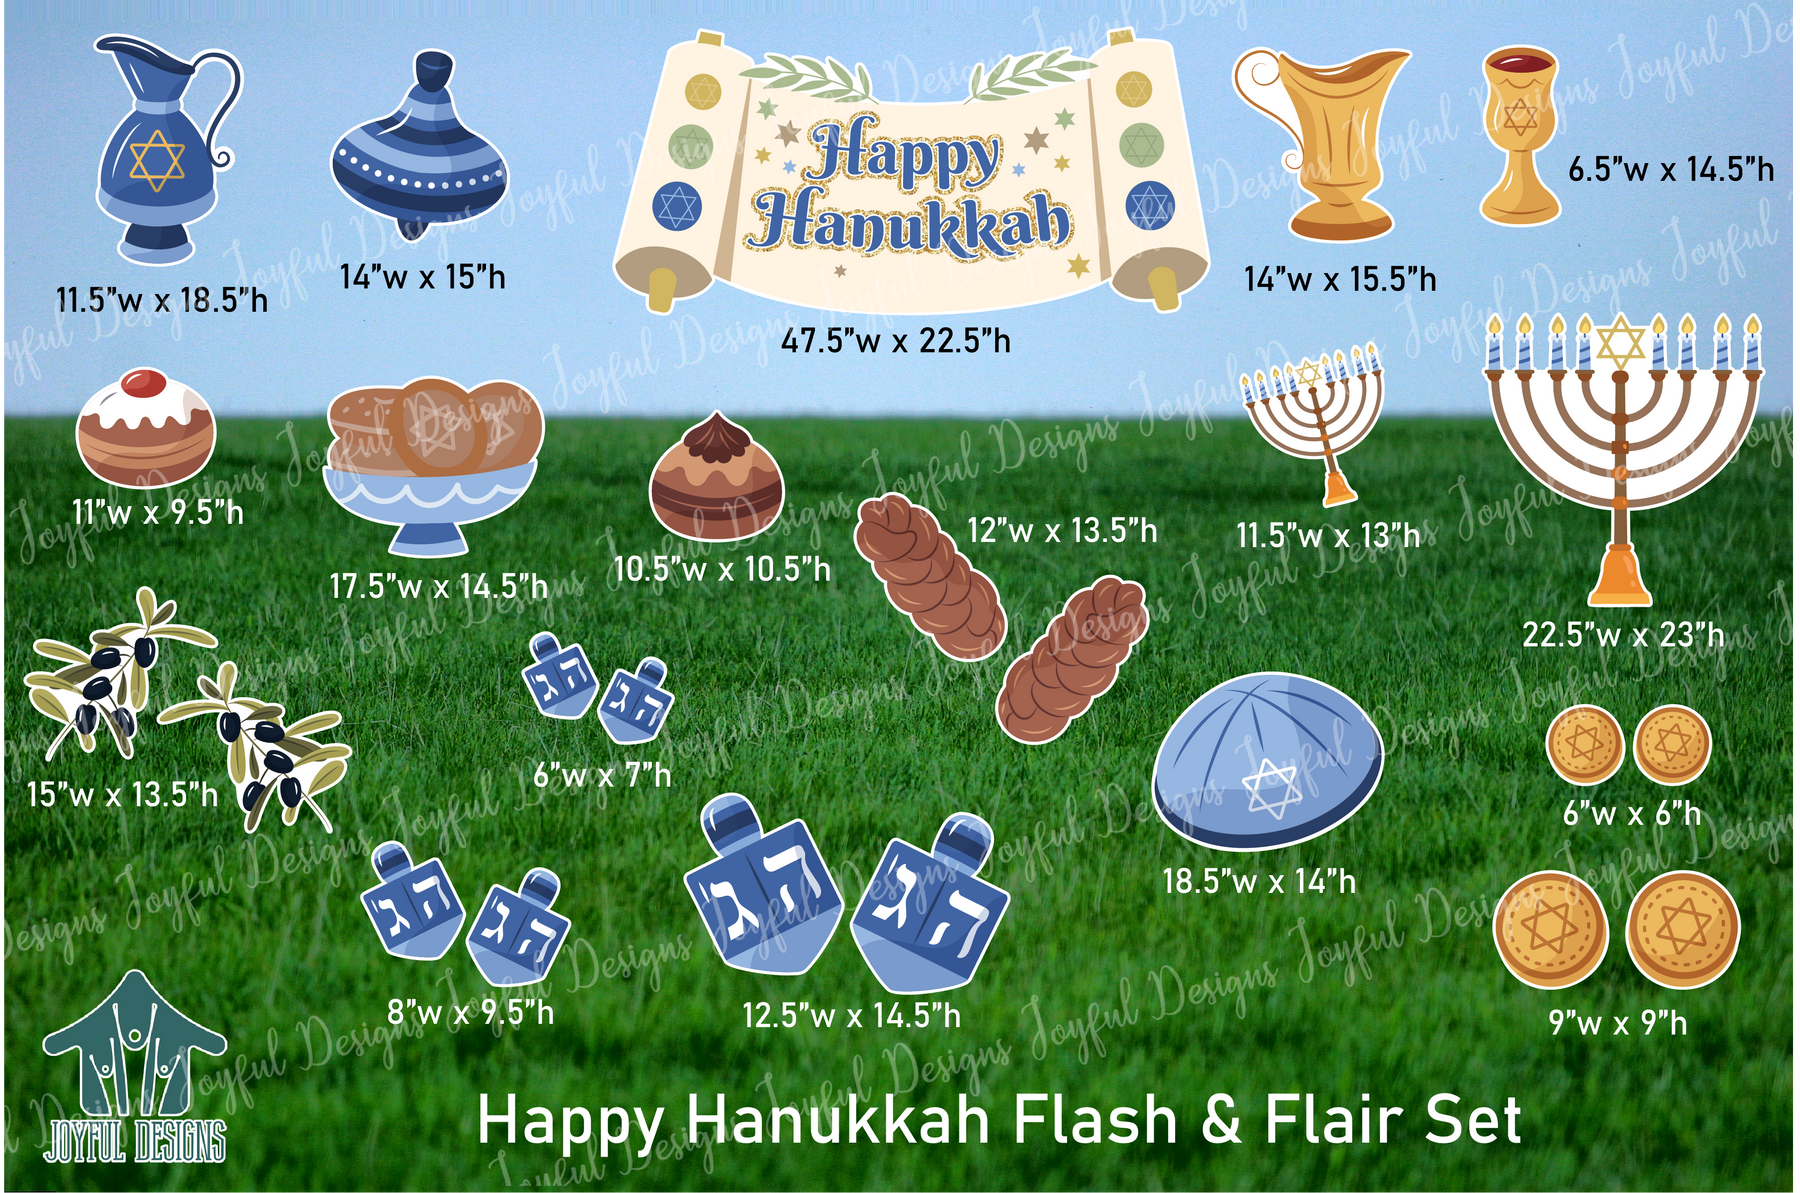 Happy Hanukkah Centerpiece & Flair Set